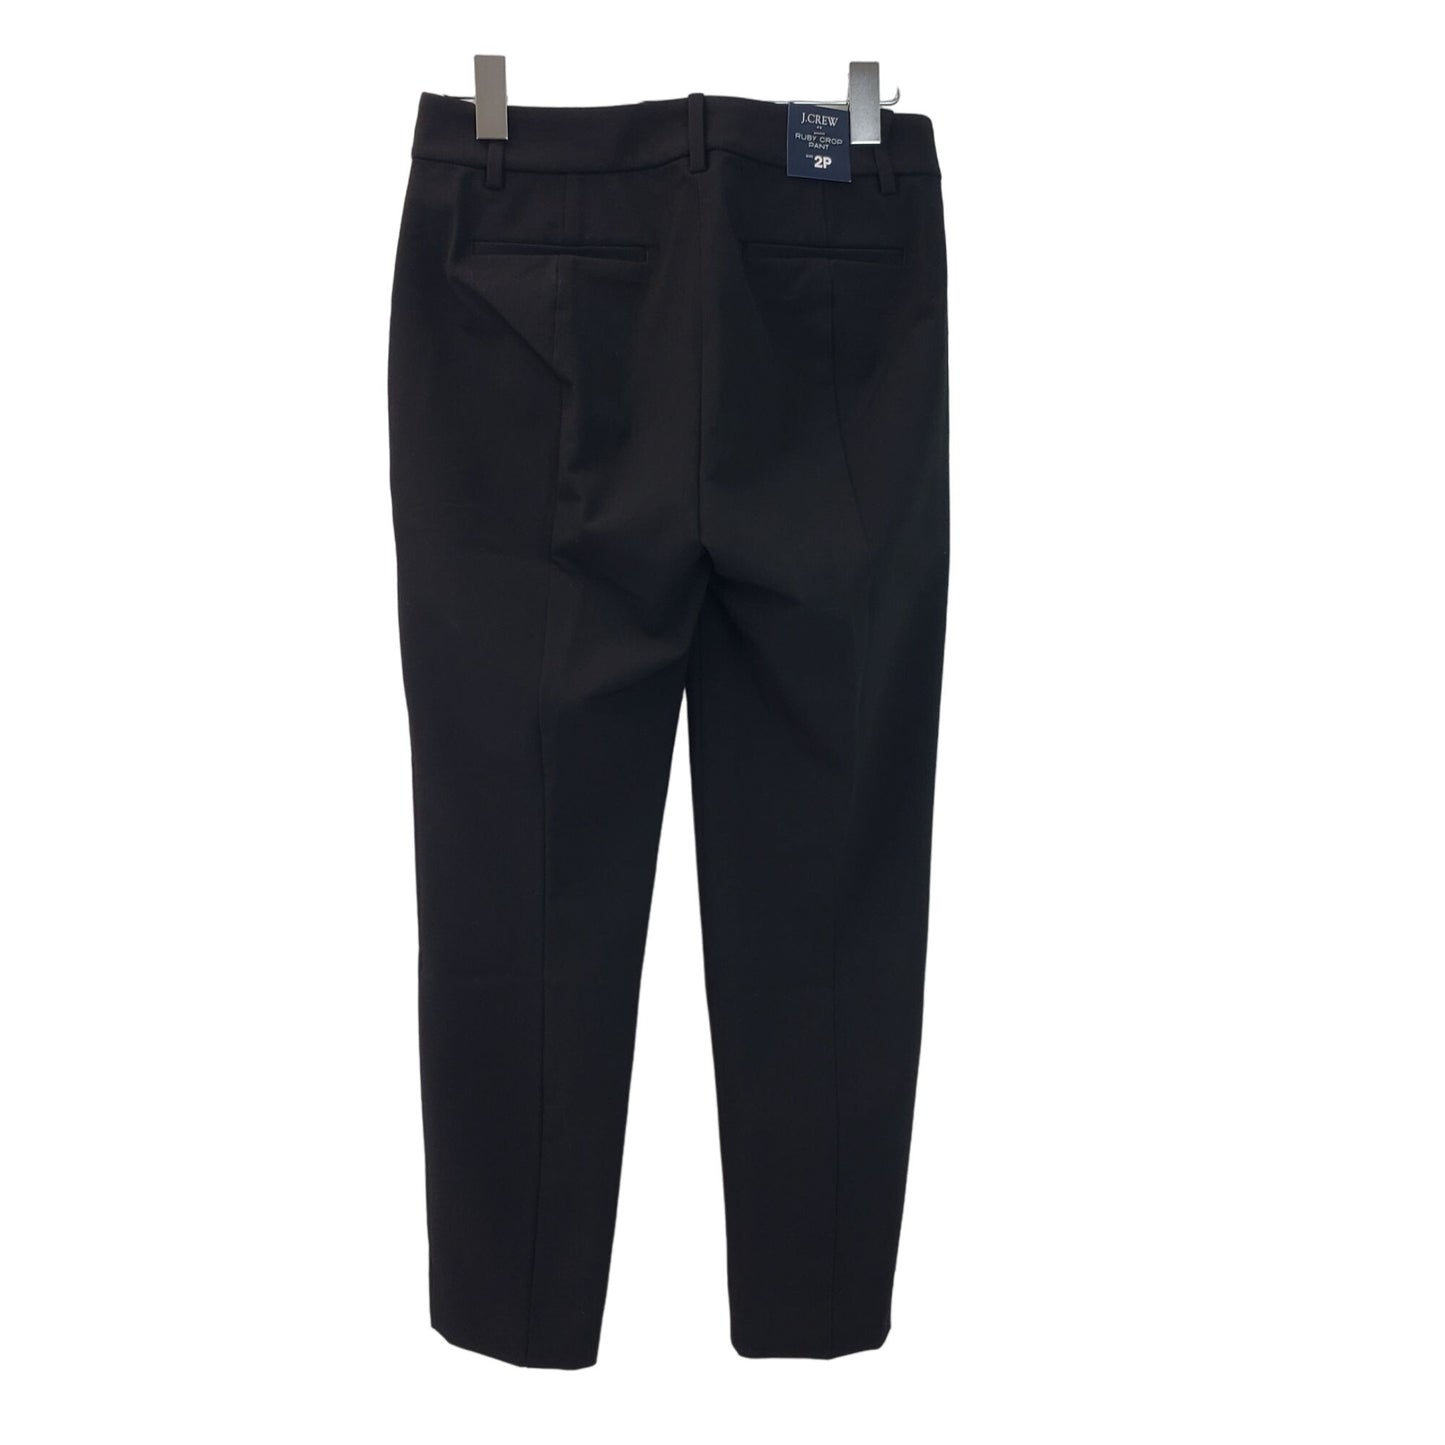 NWT J. Crew Factory Ruby Crop Trouser Pants Size 2 Petite